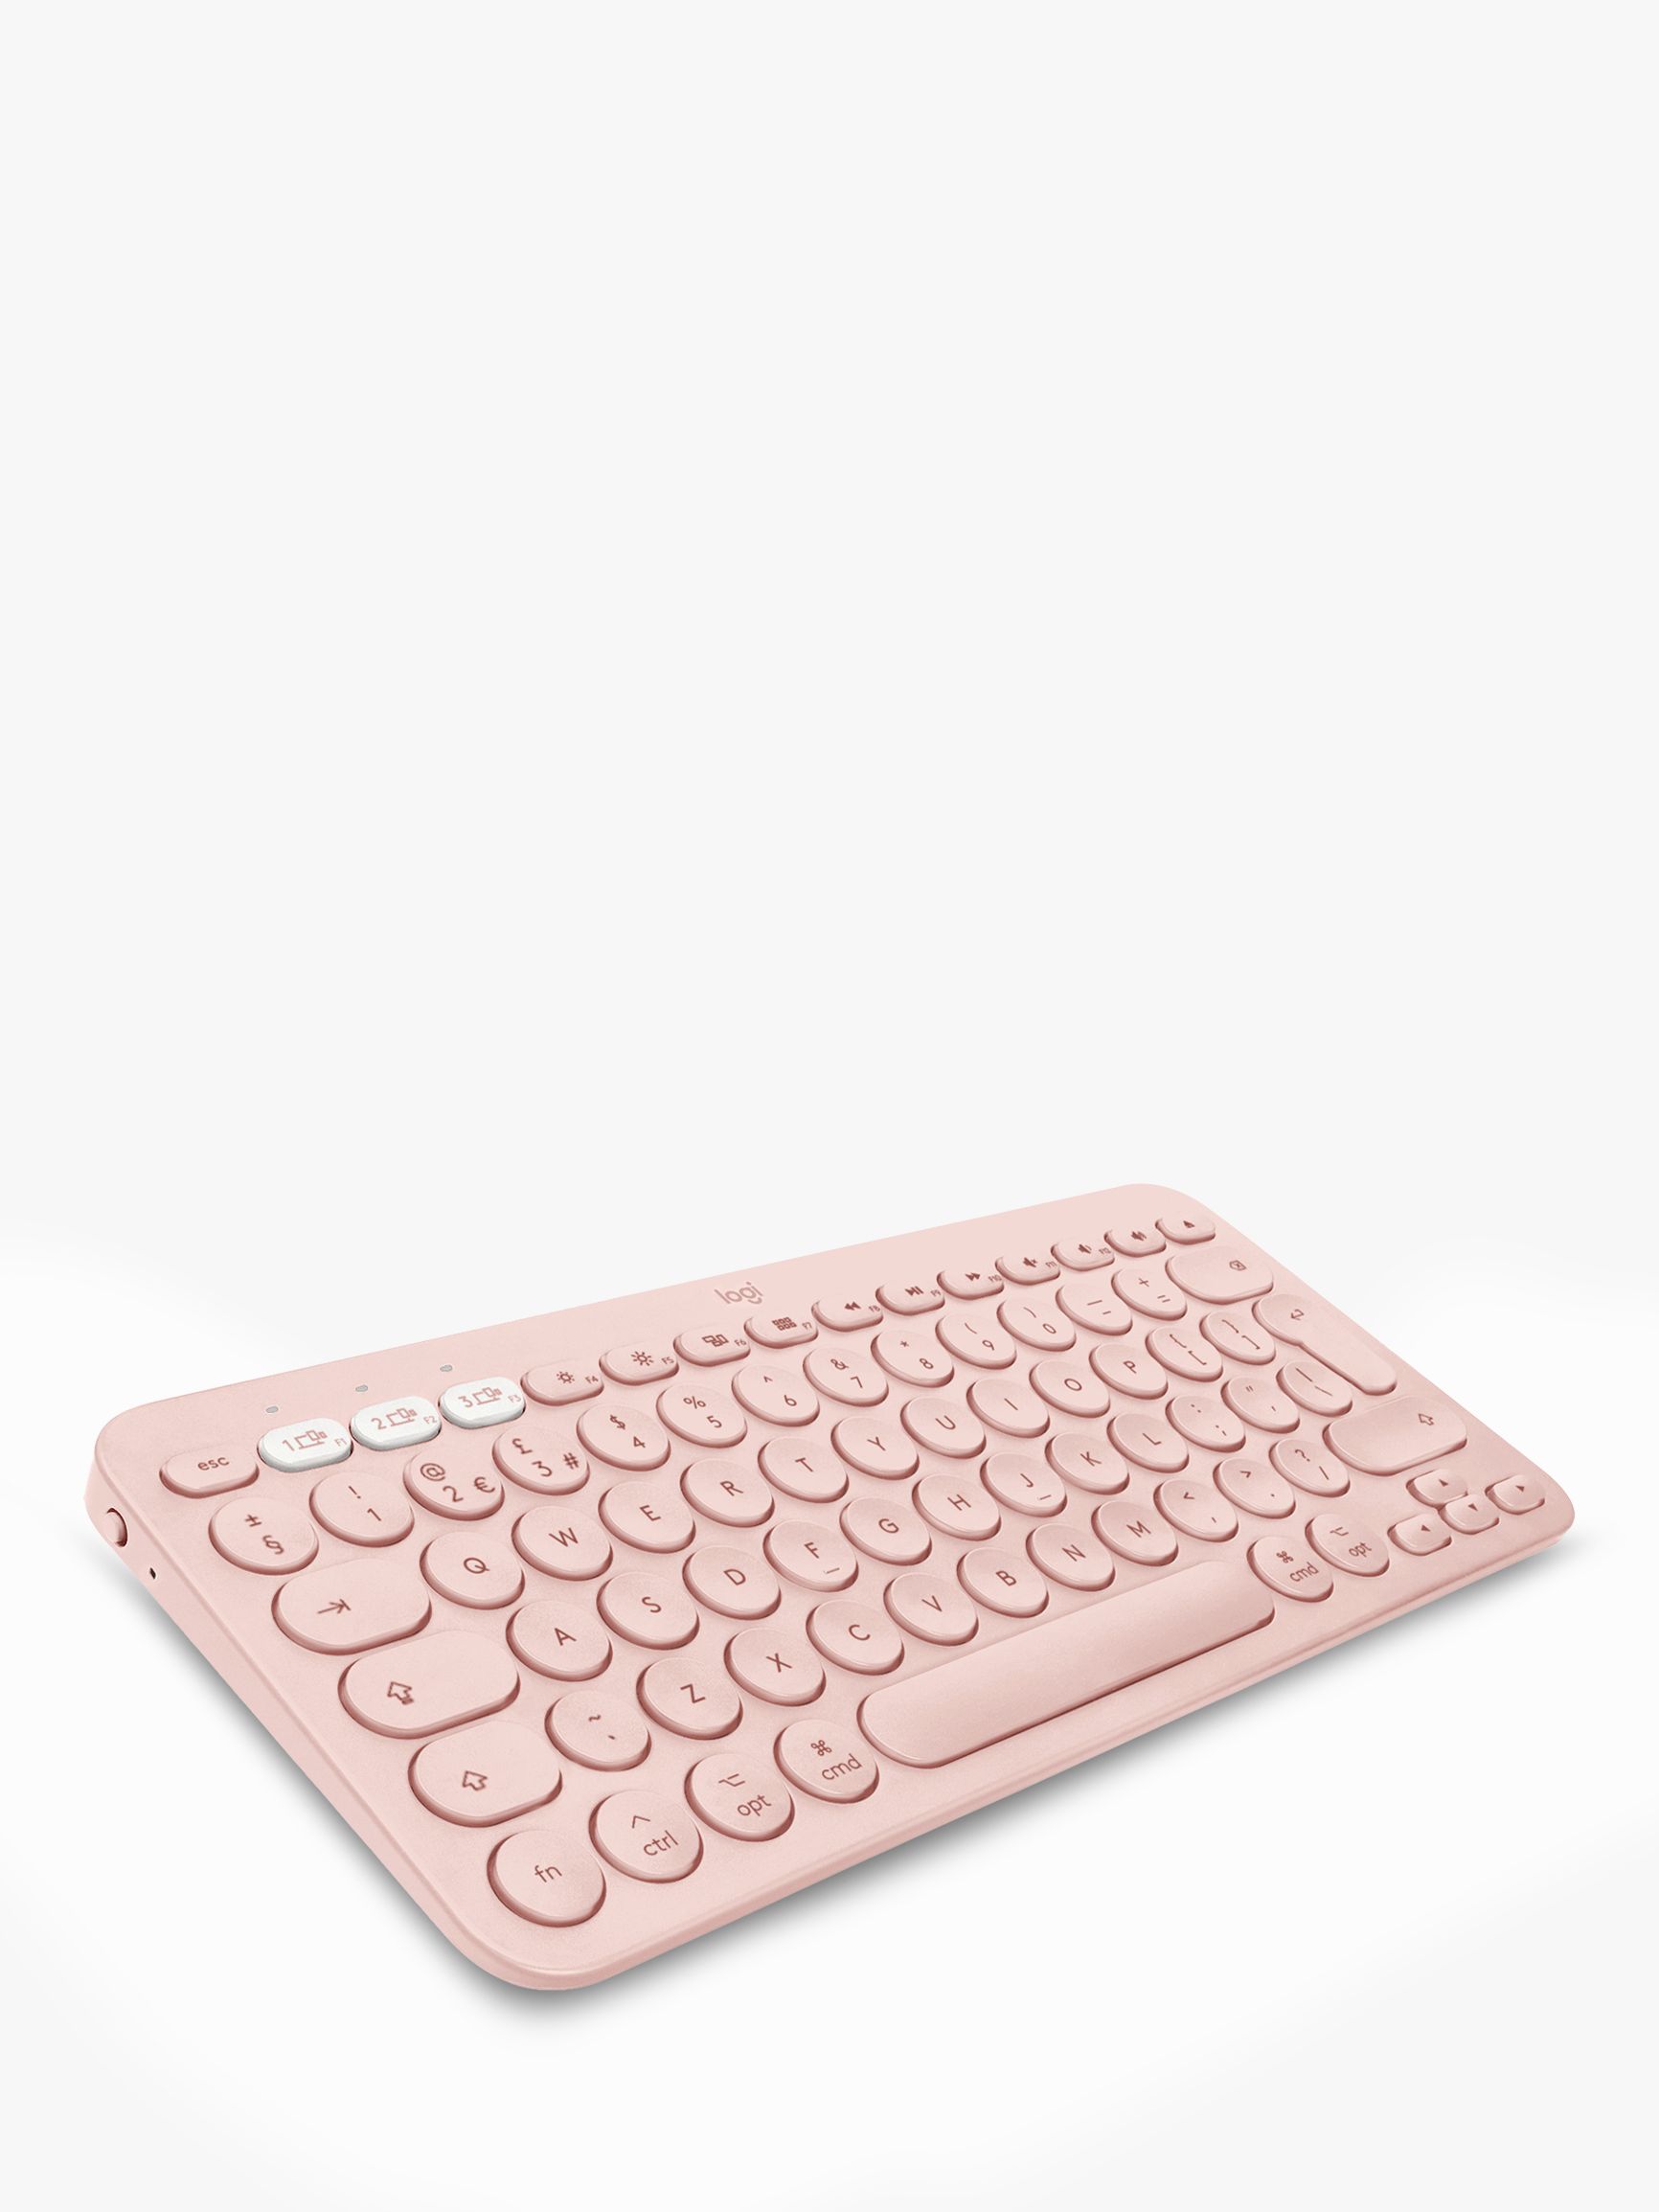 Logitech K380 Multi-Device Bluetooth Keyboard for Mac, Rose